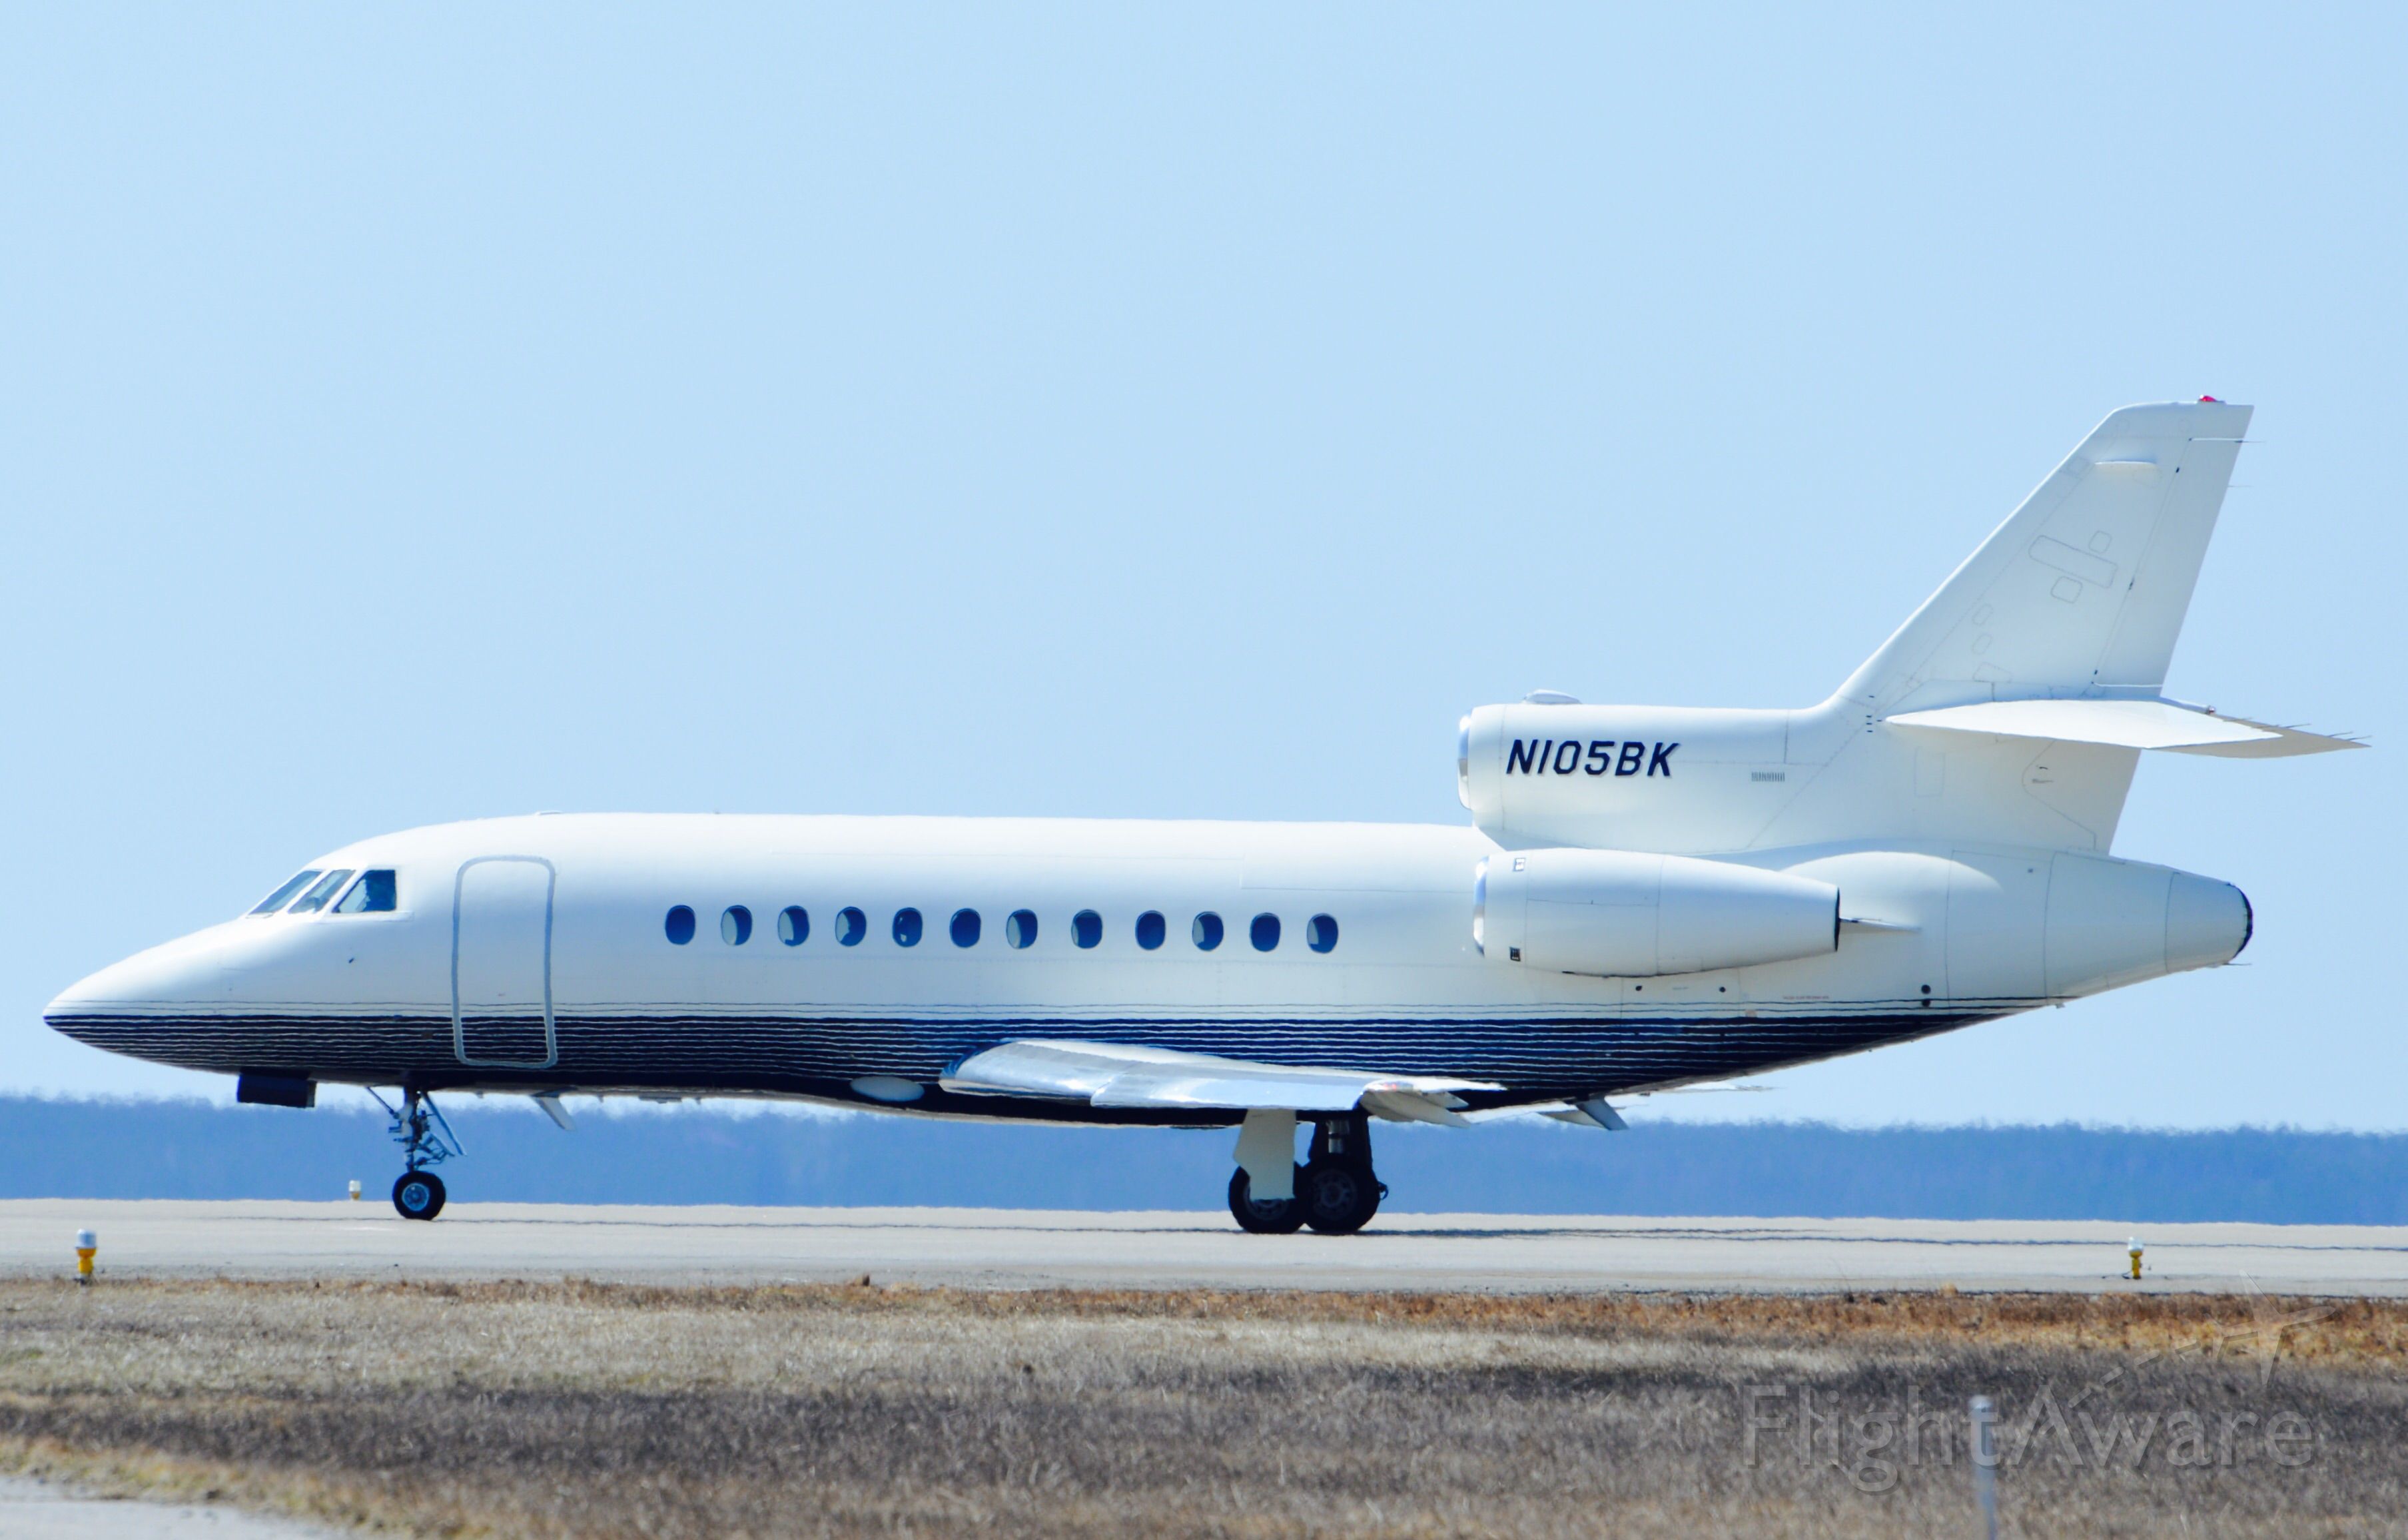 Dassault Falcon 900 (N105BK) - Departing Gander Airport for Amsterdam on runway 21.